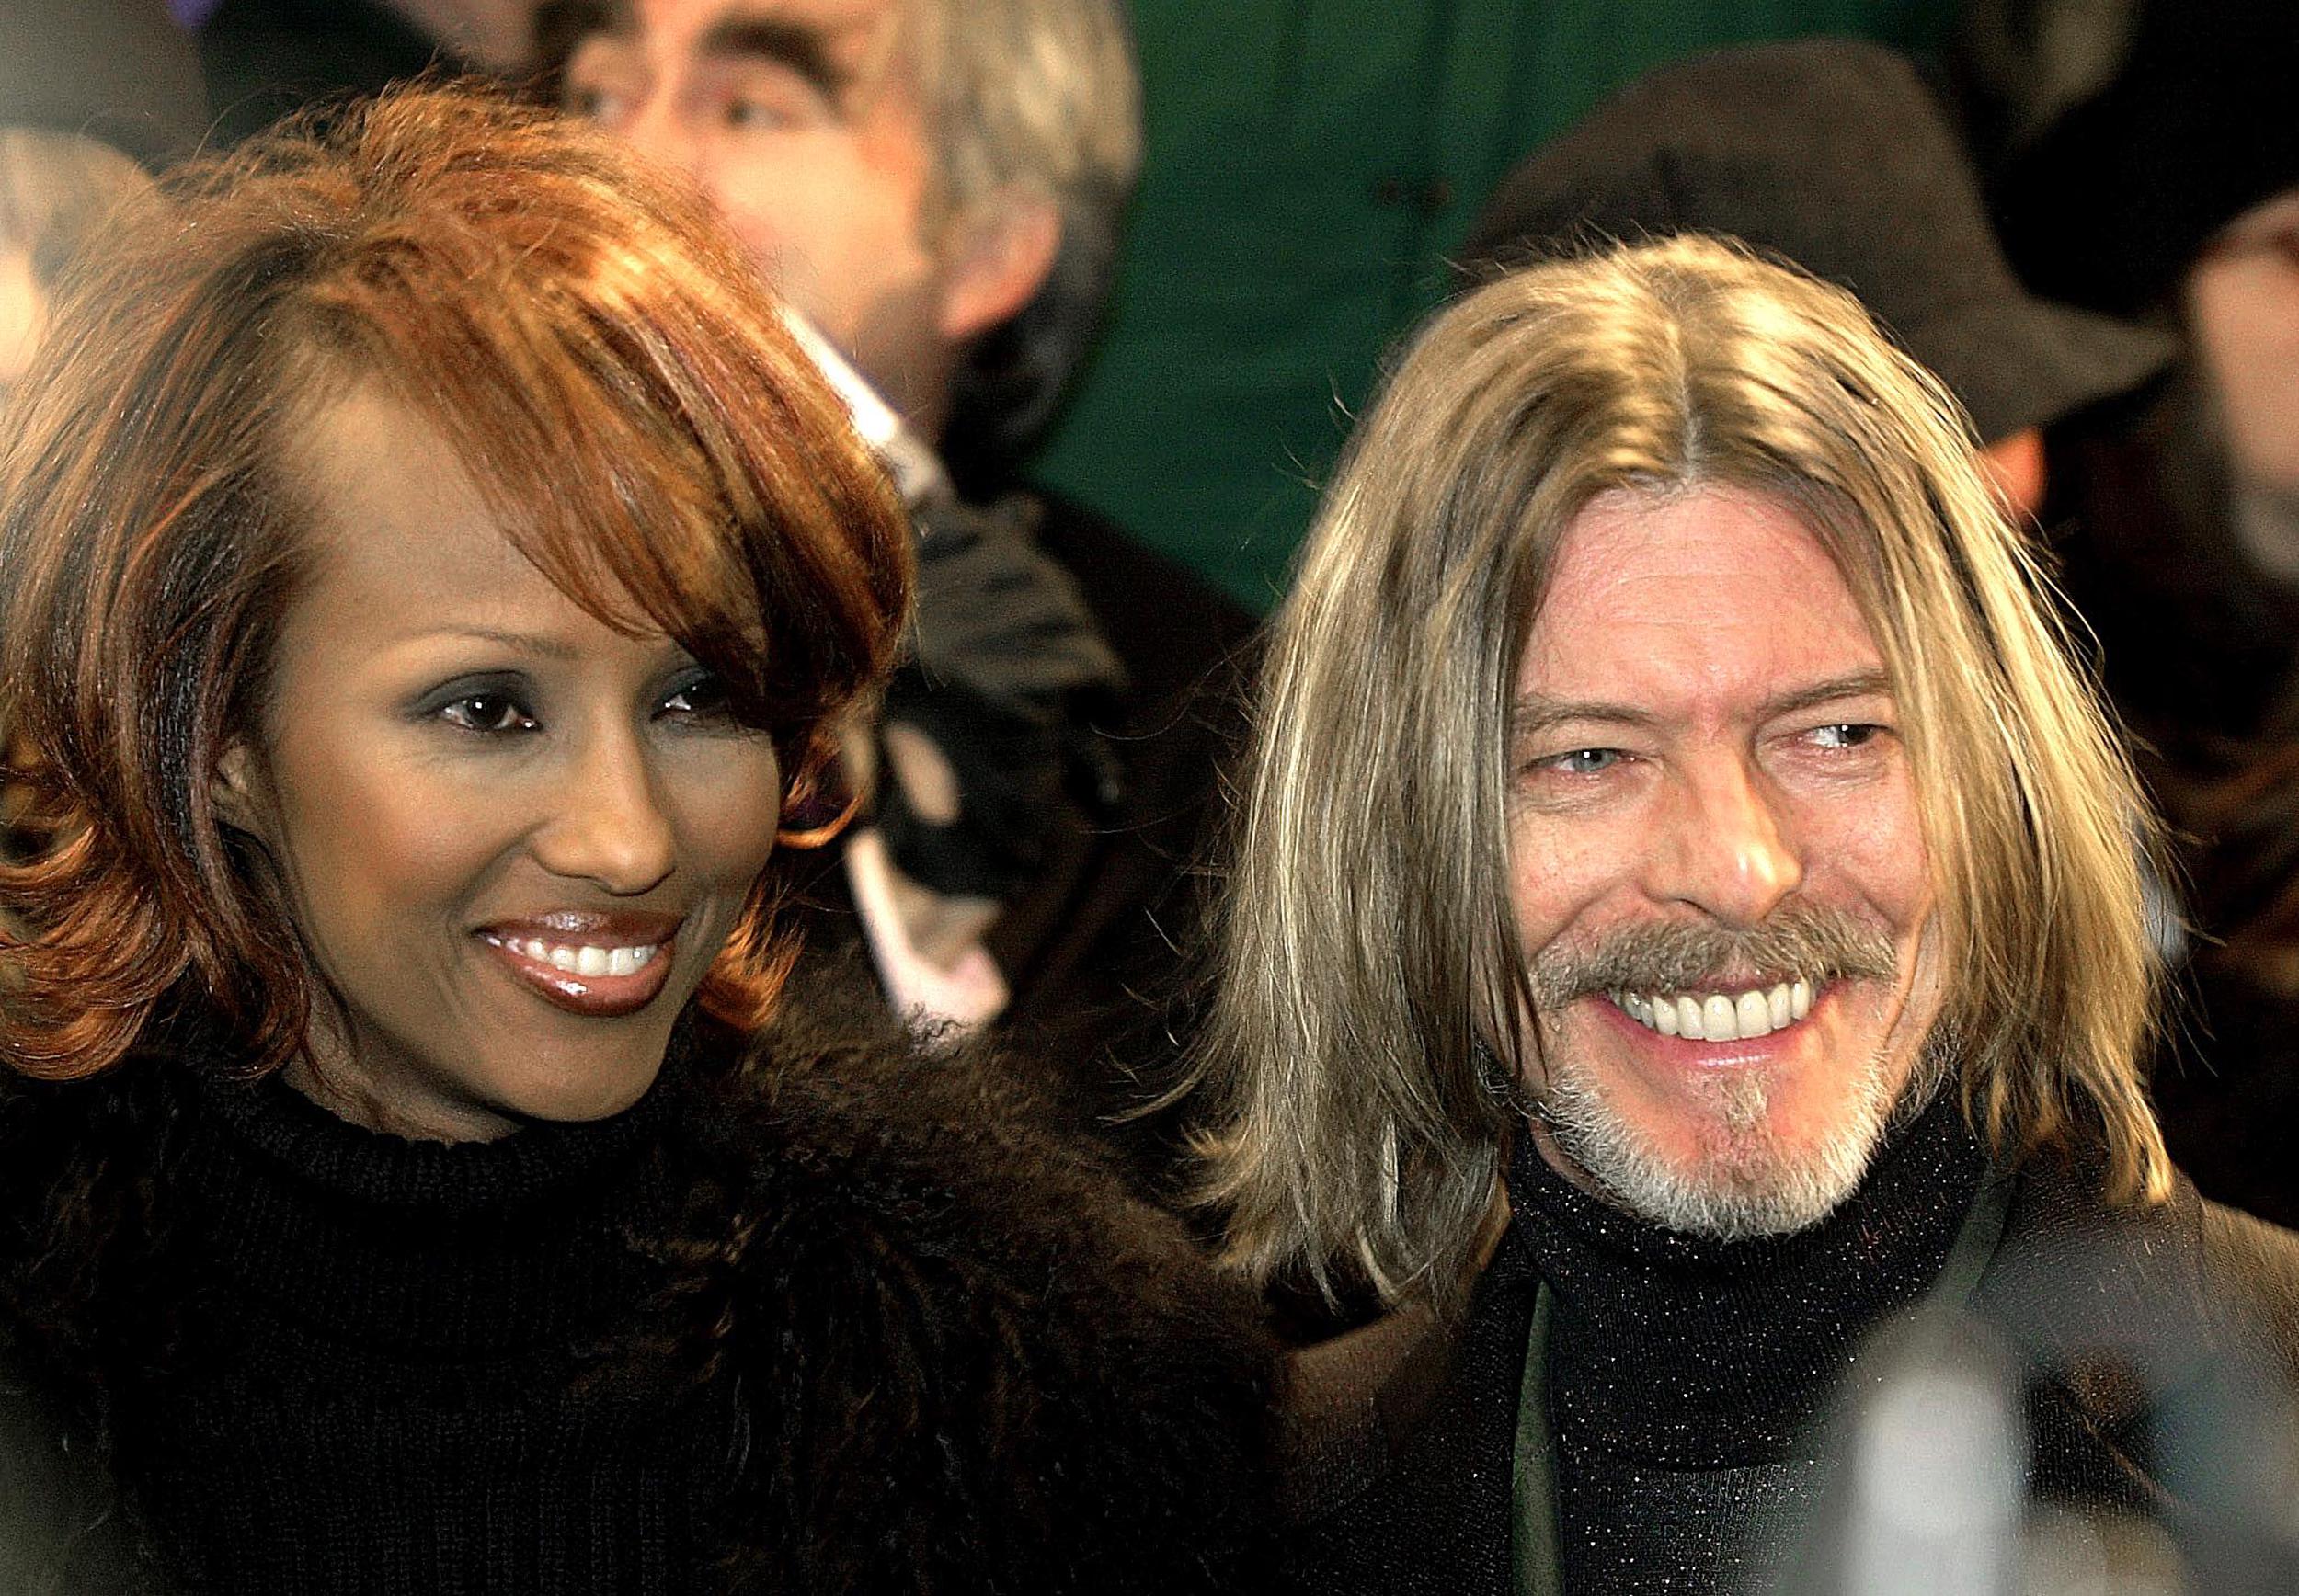  David Bowie e la moglie, la modella Iman  AFP PHOTO / FILES / Stan HONDA / AFP / STAN HONDA